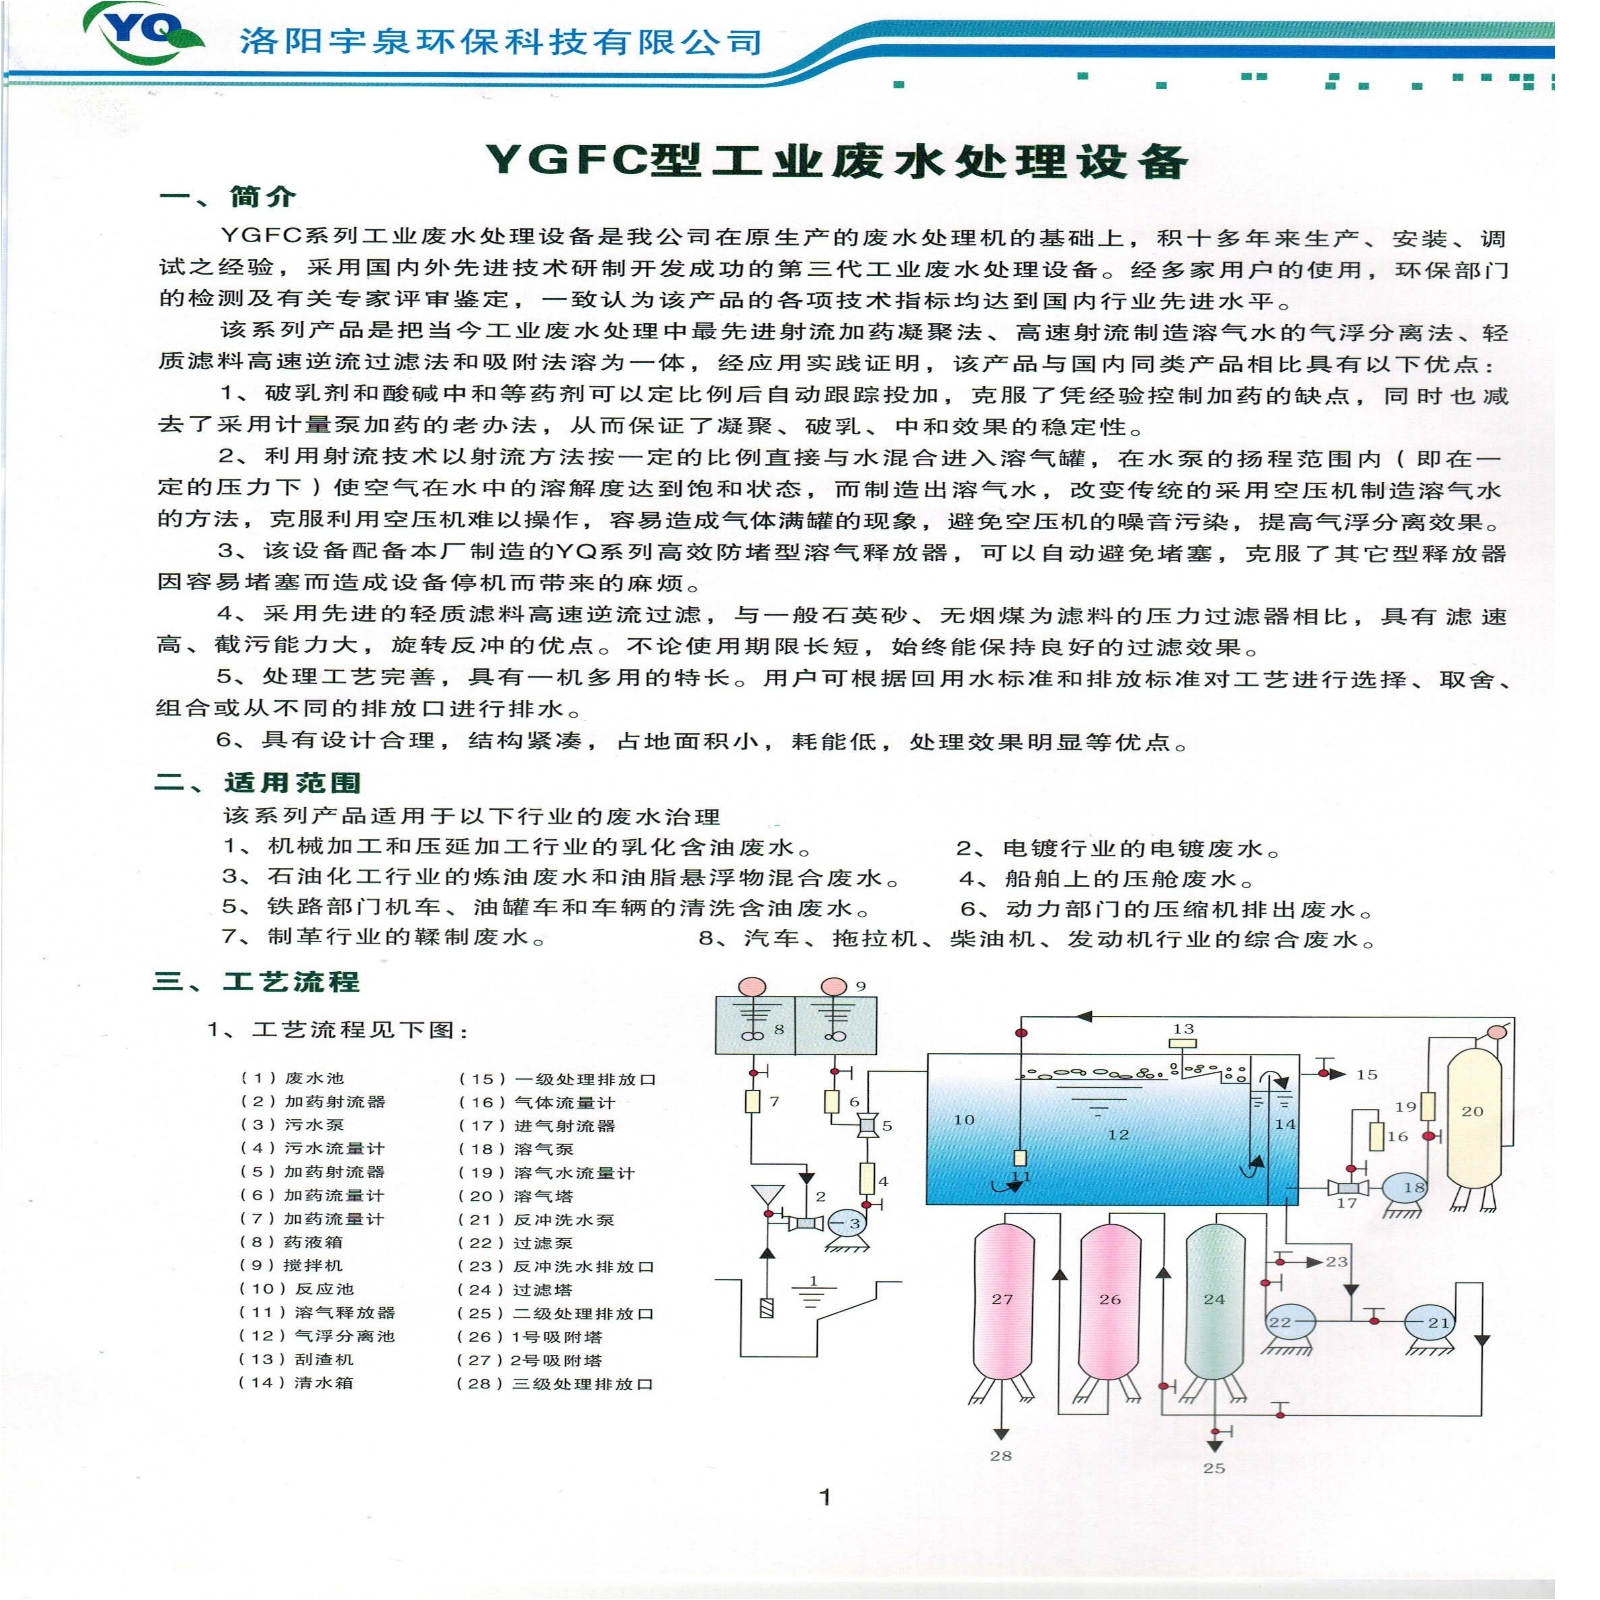 YGFC系列工业废水处理设备